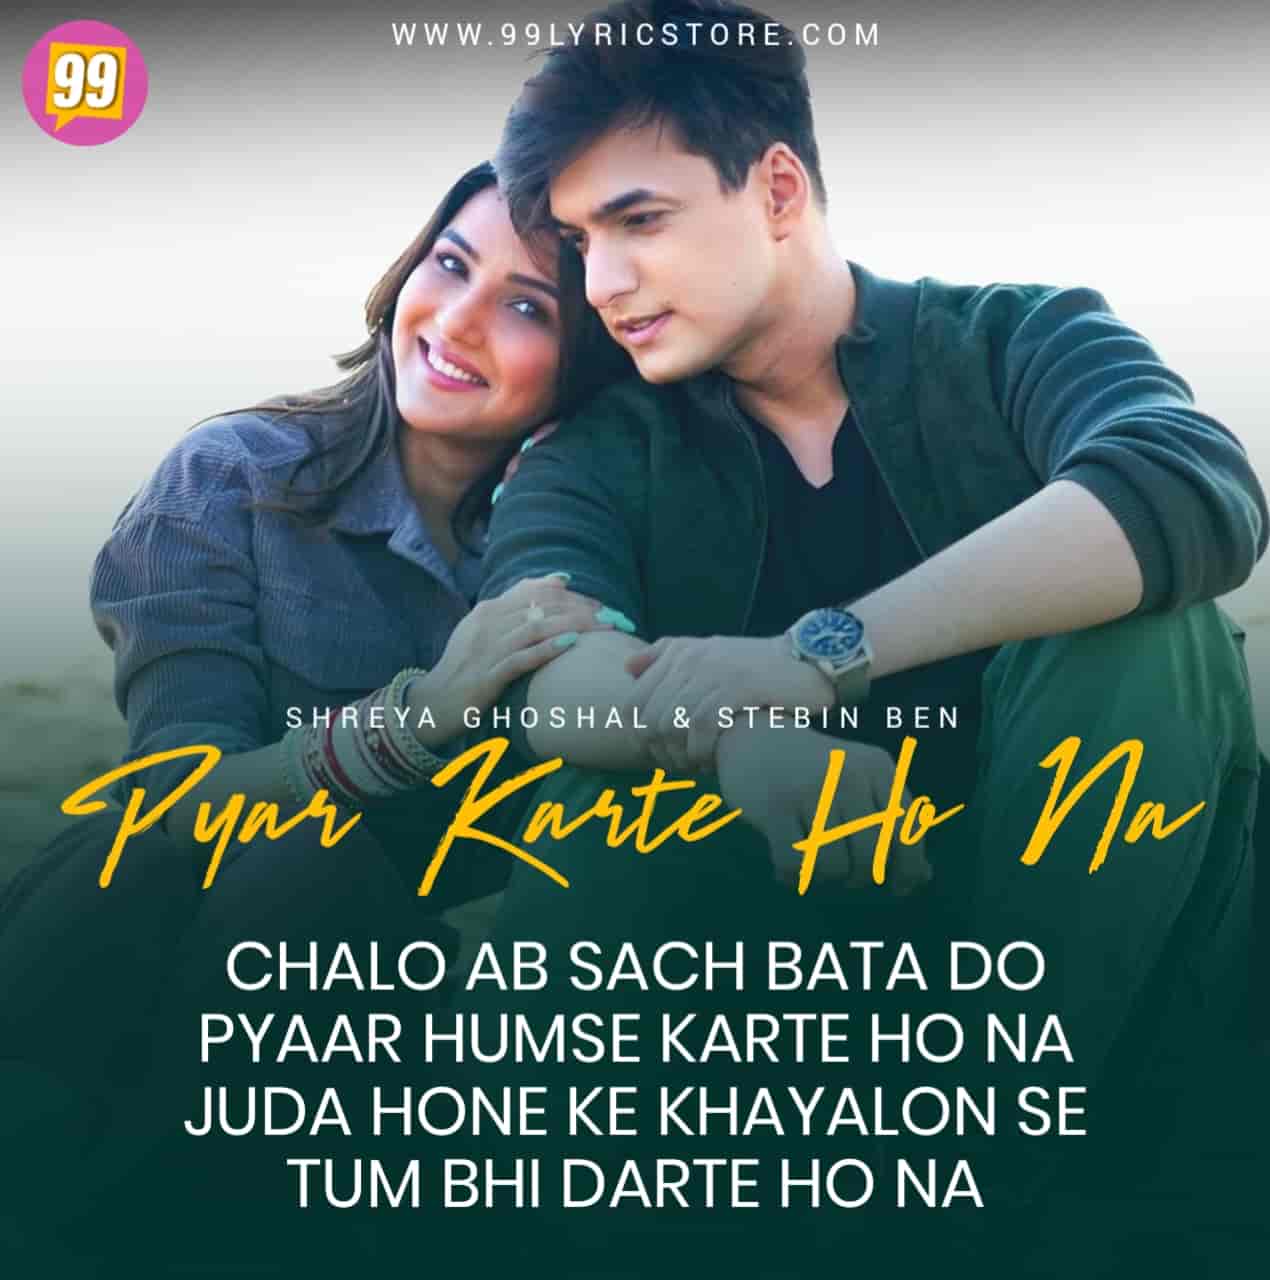 Pyar Karte Ho Na Love Hindi Song Image Features Jasmin Bhasin and Mohsin Khan